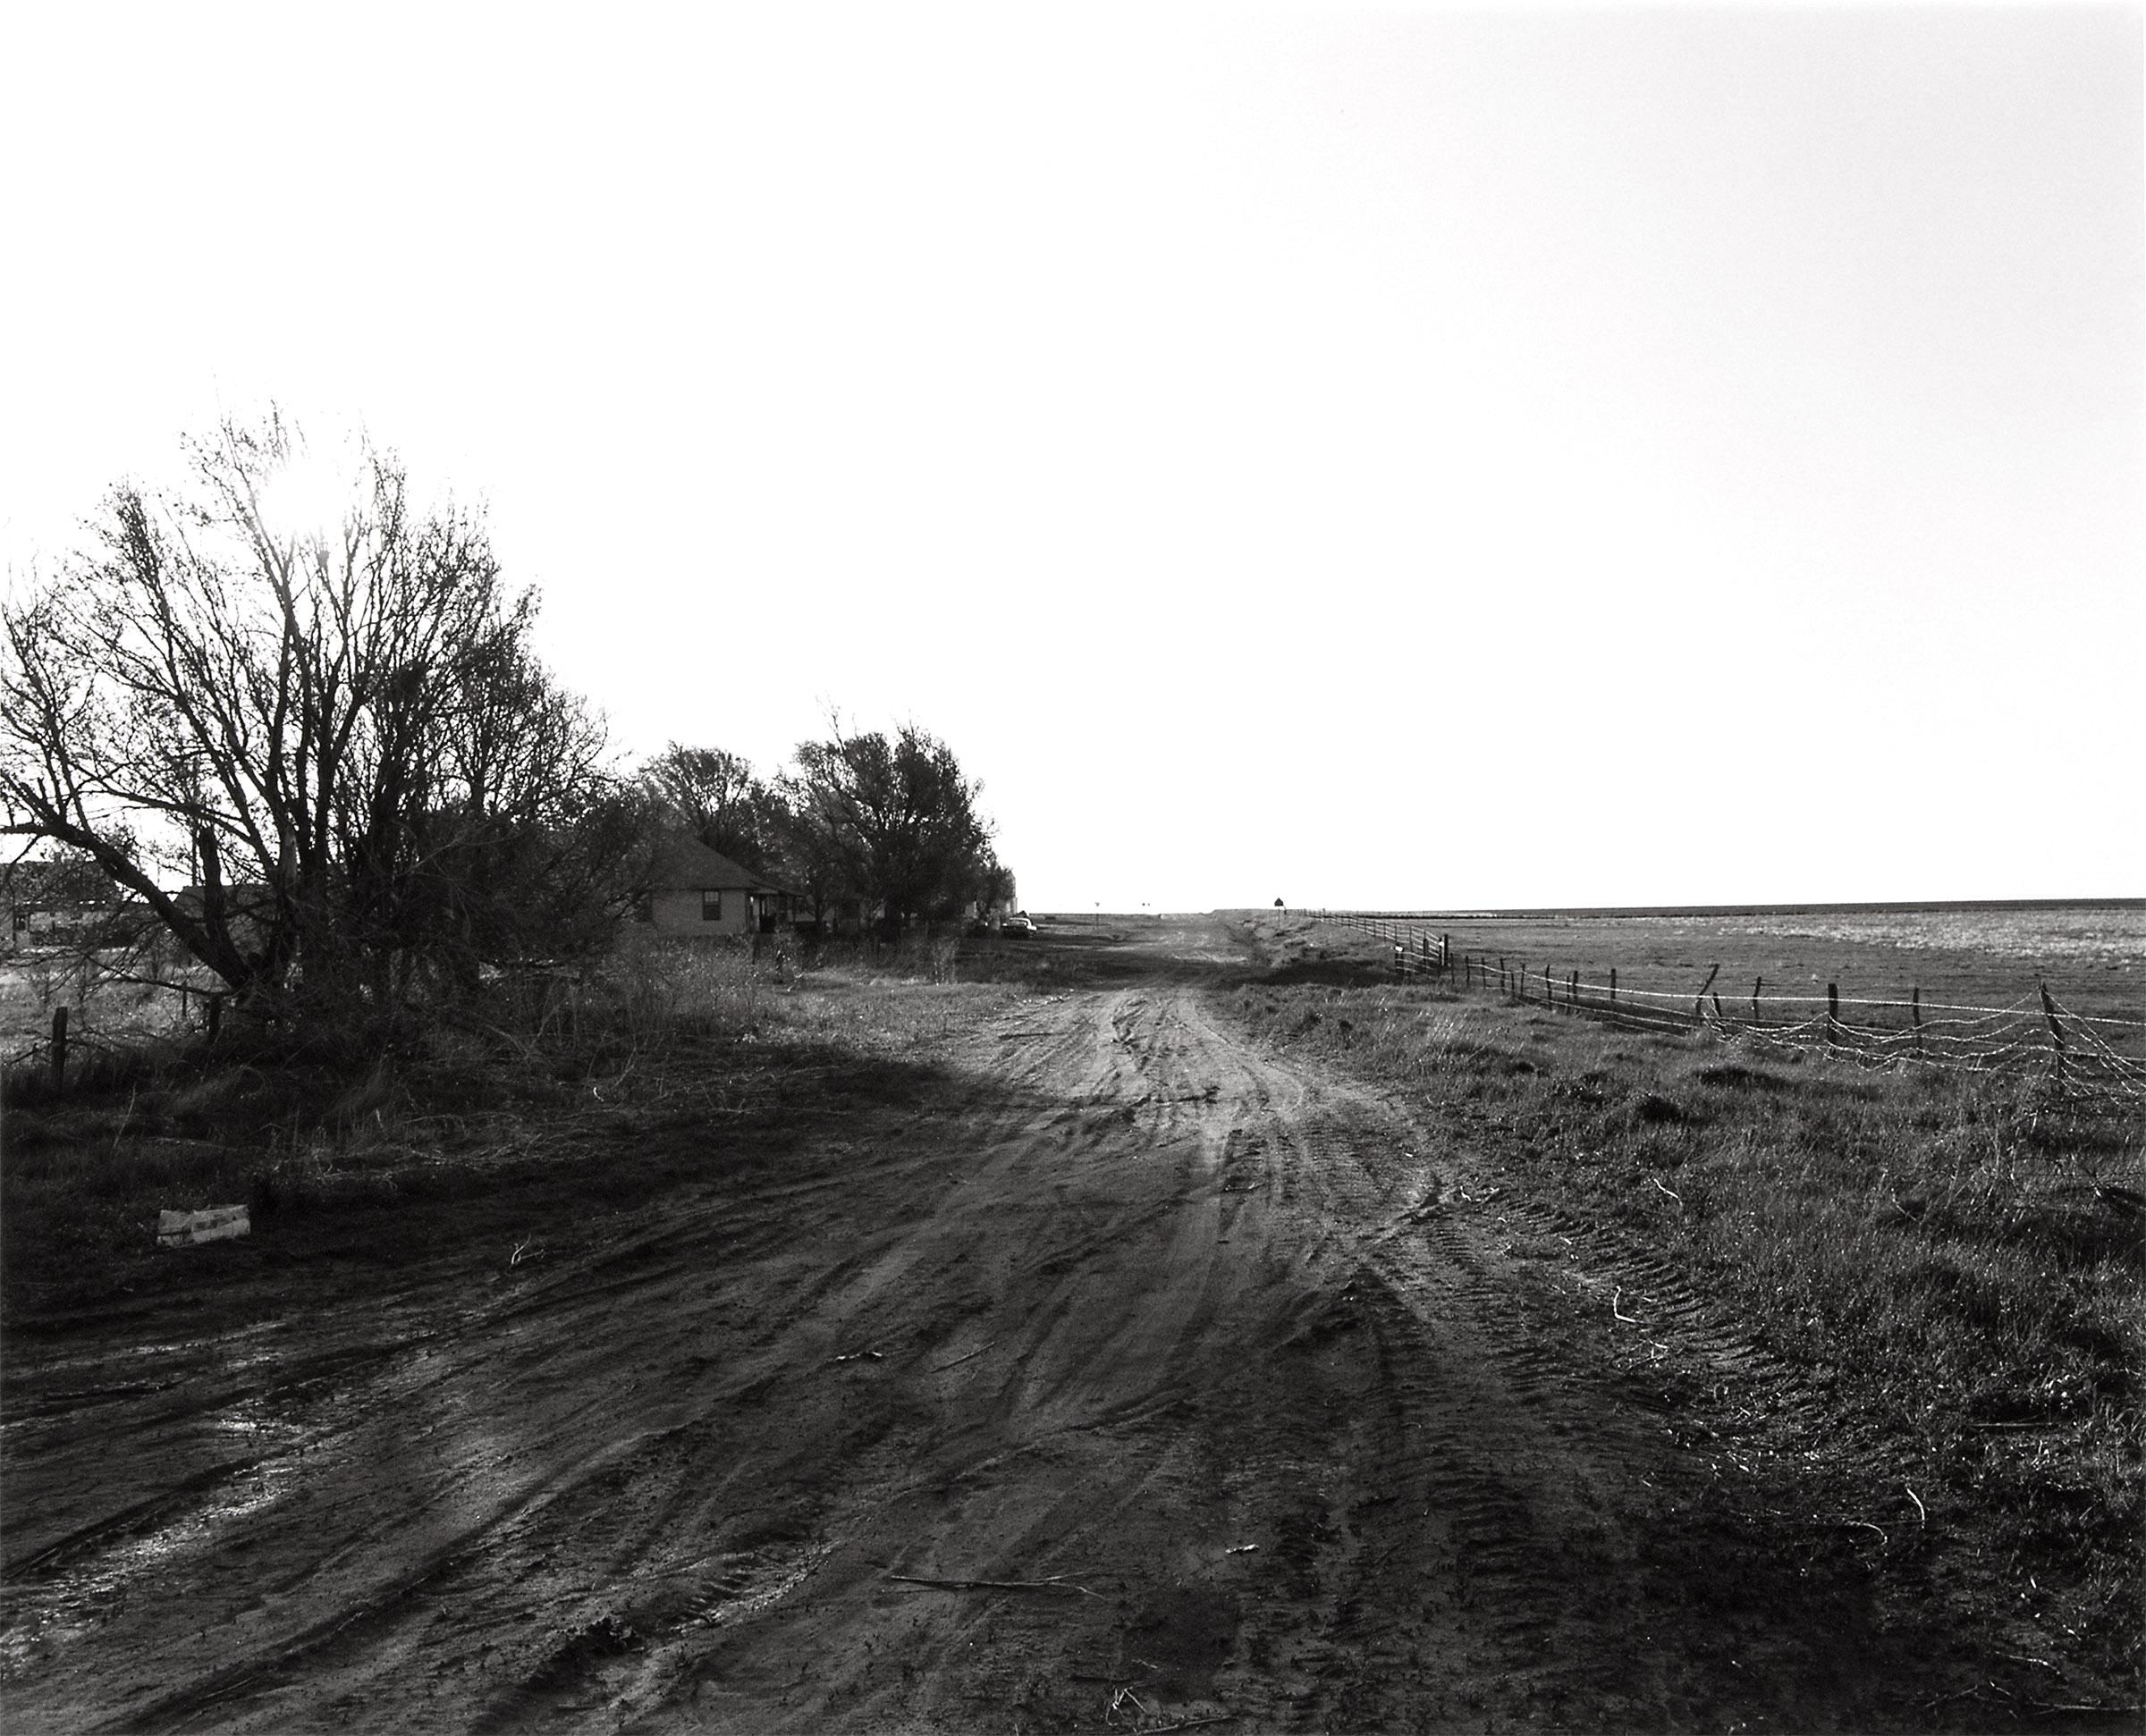 Edge of Briggsdale, Colorado, 'Missouri West' series, Black & White Landscape - Photograph by Robert Adams